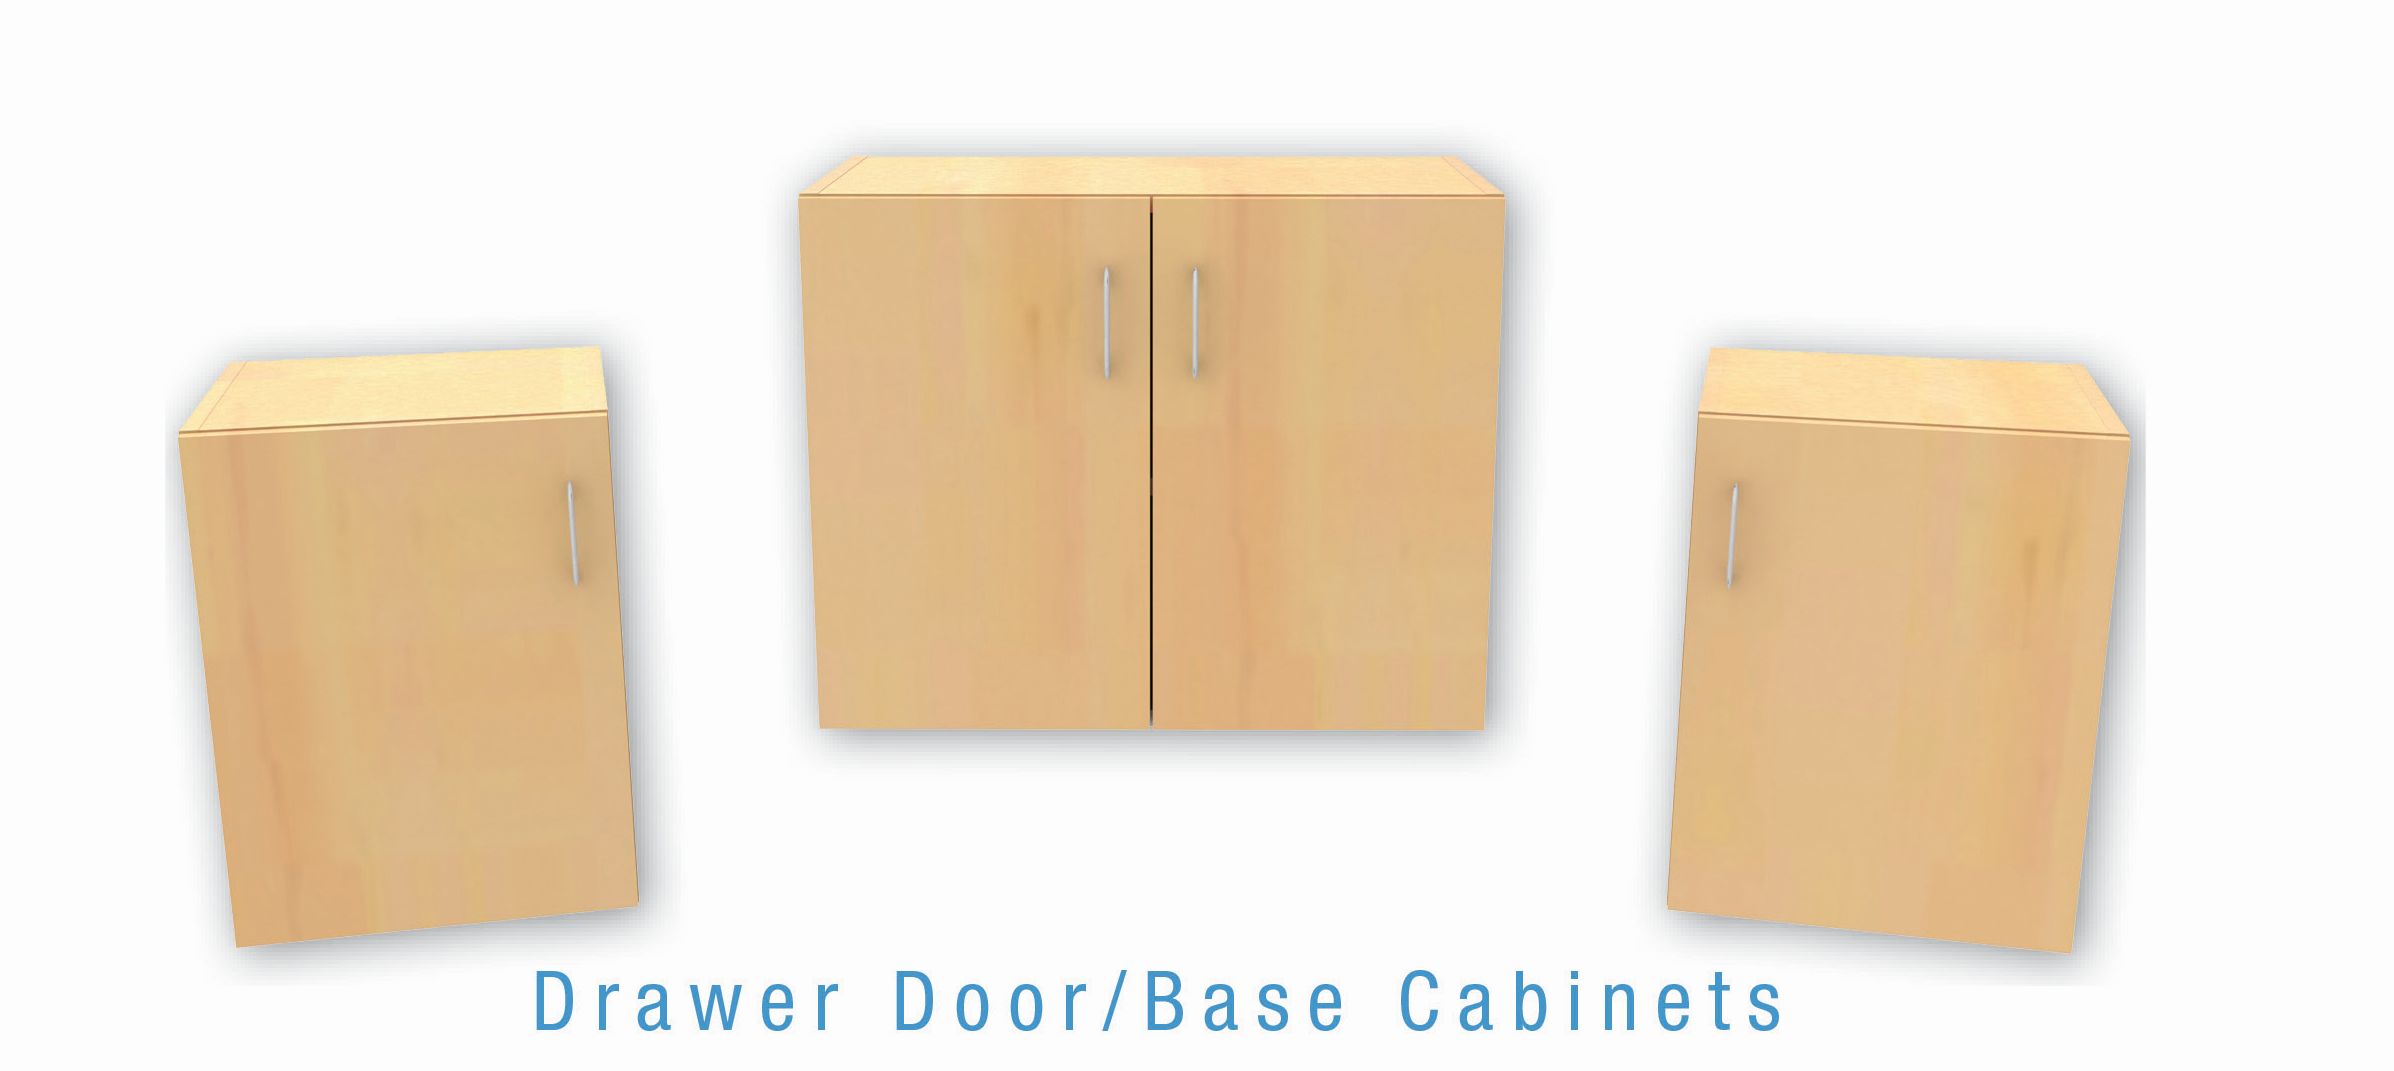 Drawer Door Base Cabinets